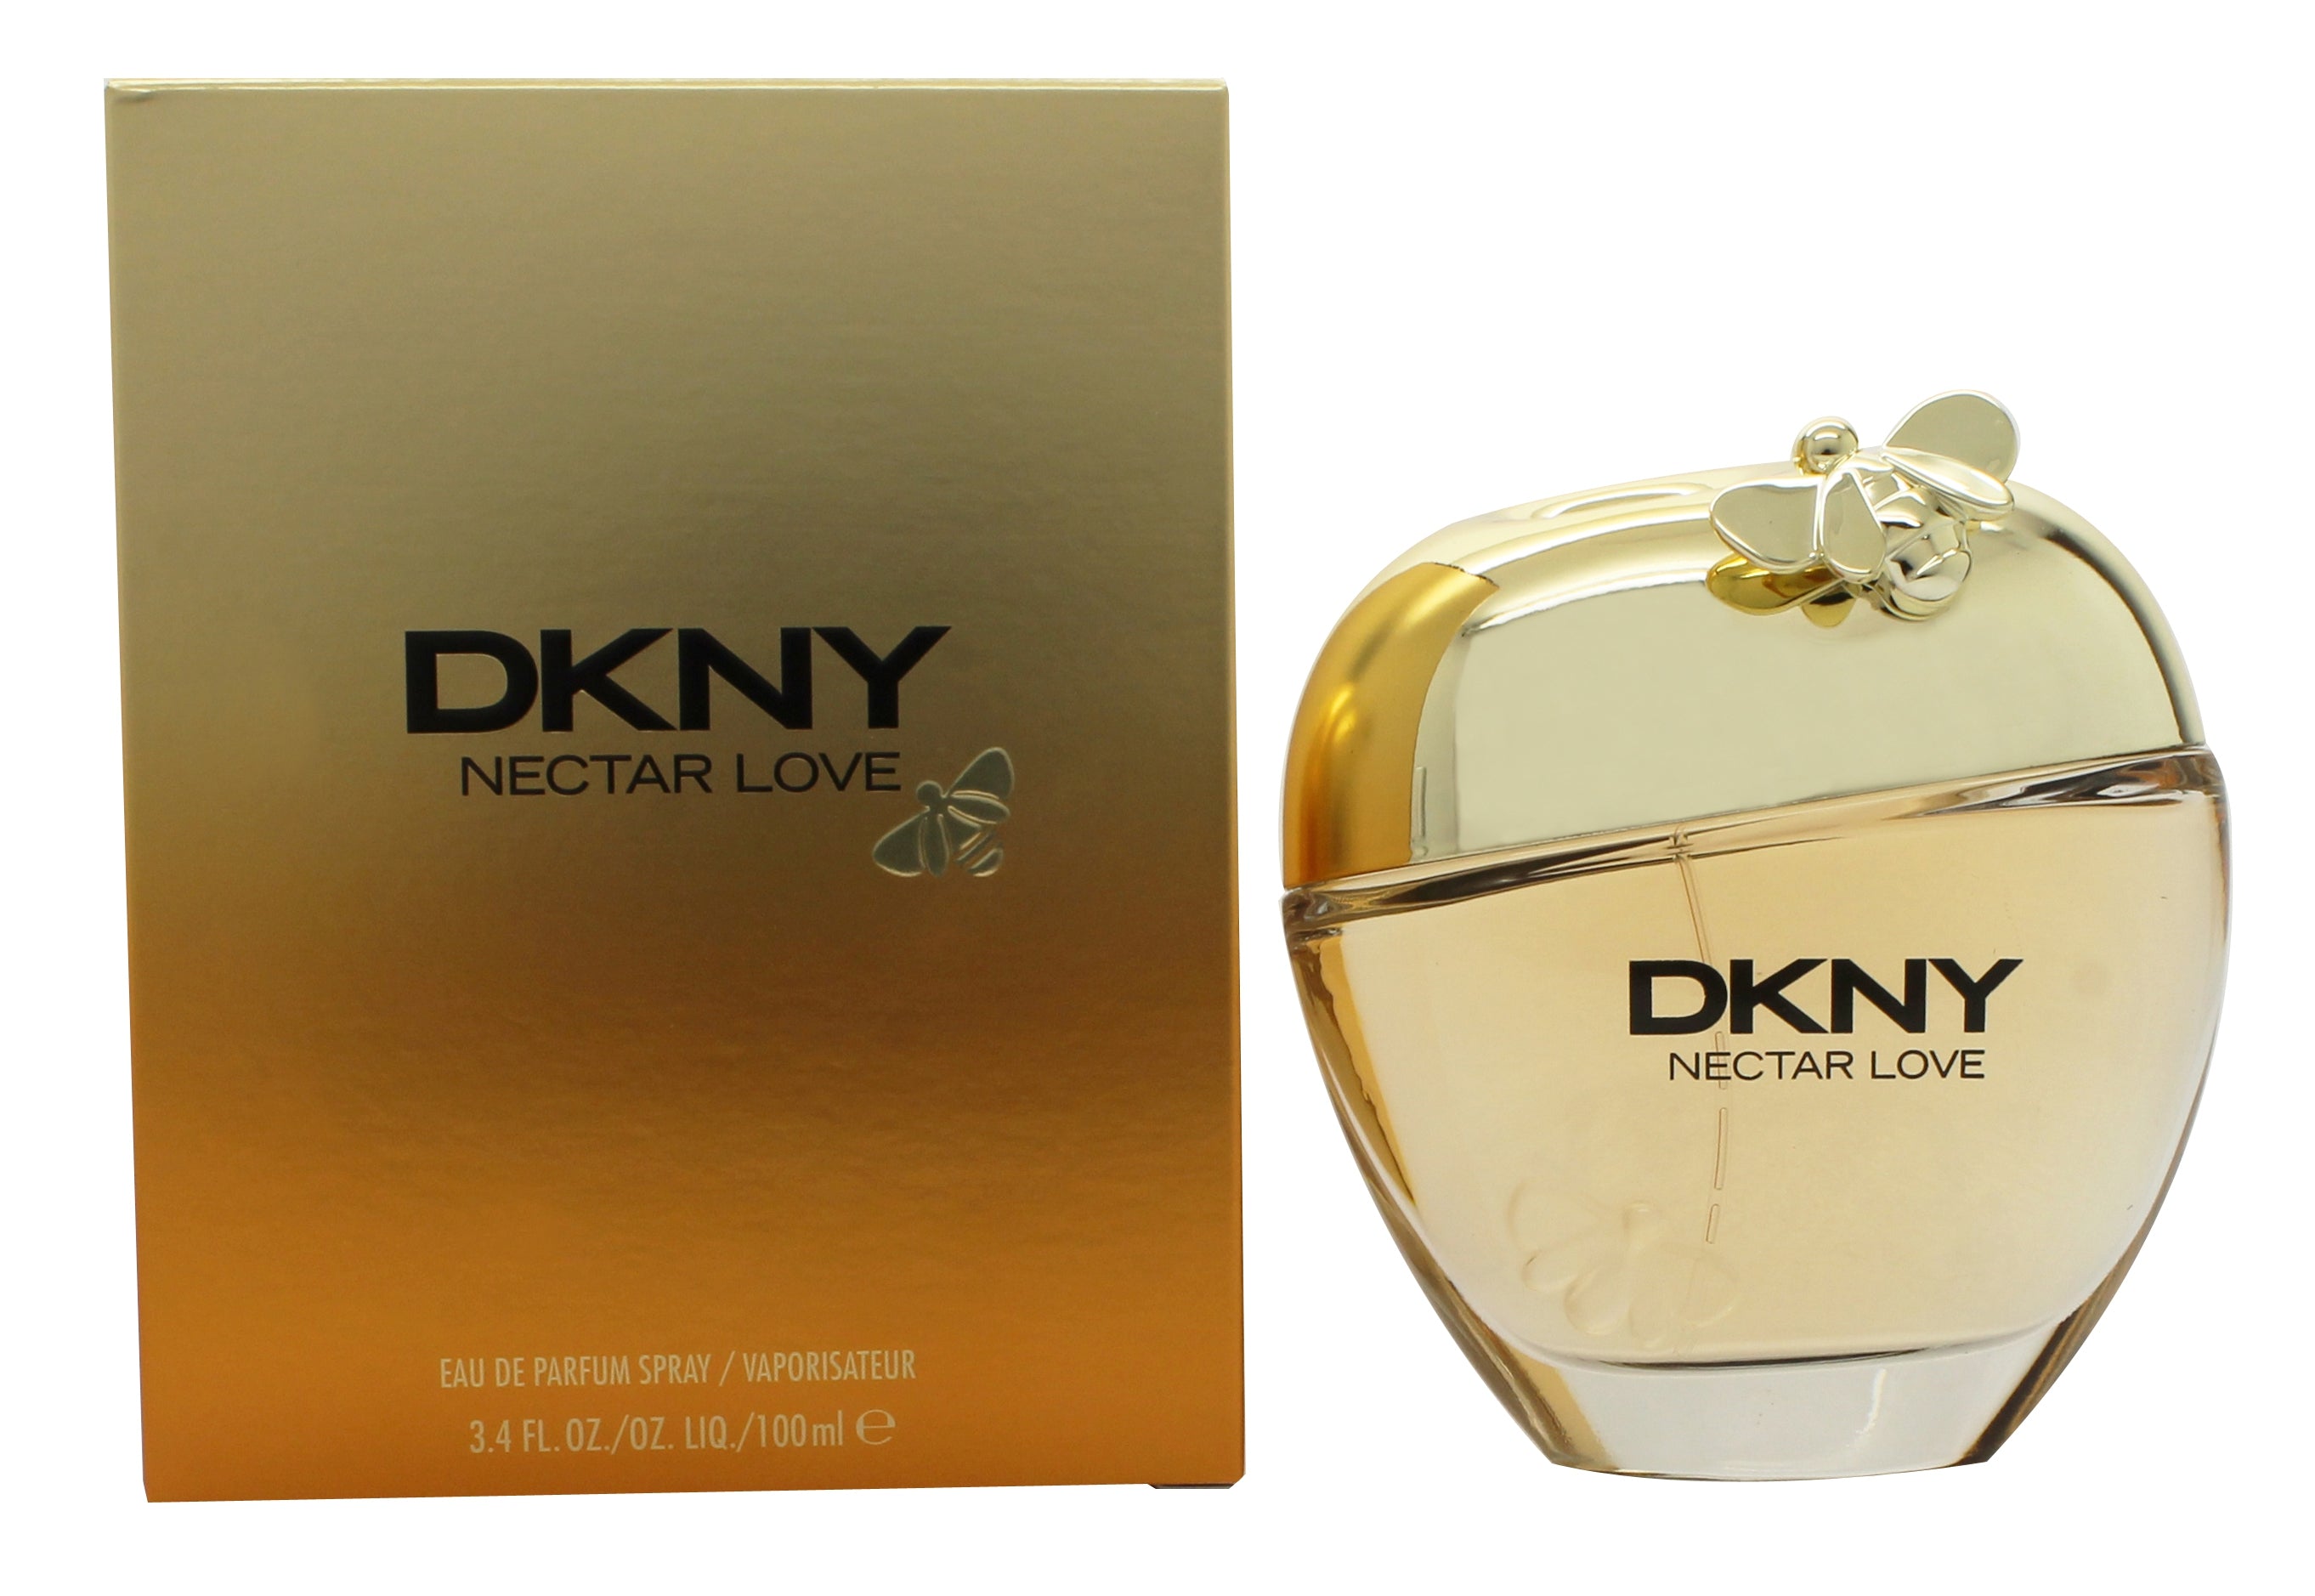 View DKNY Nectar Love Eau de Parfum 100ml Spray information